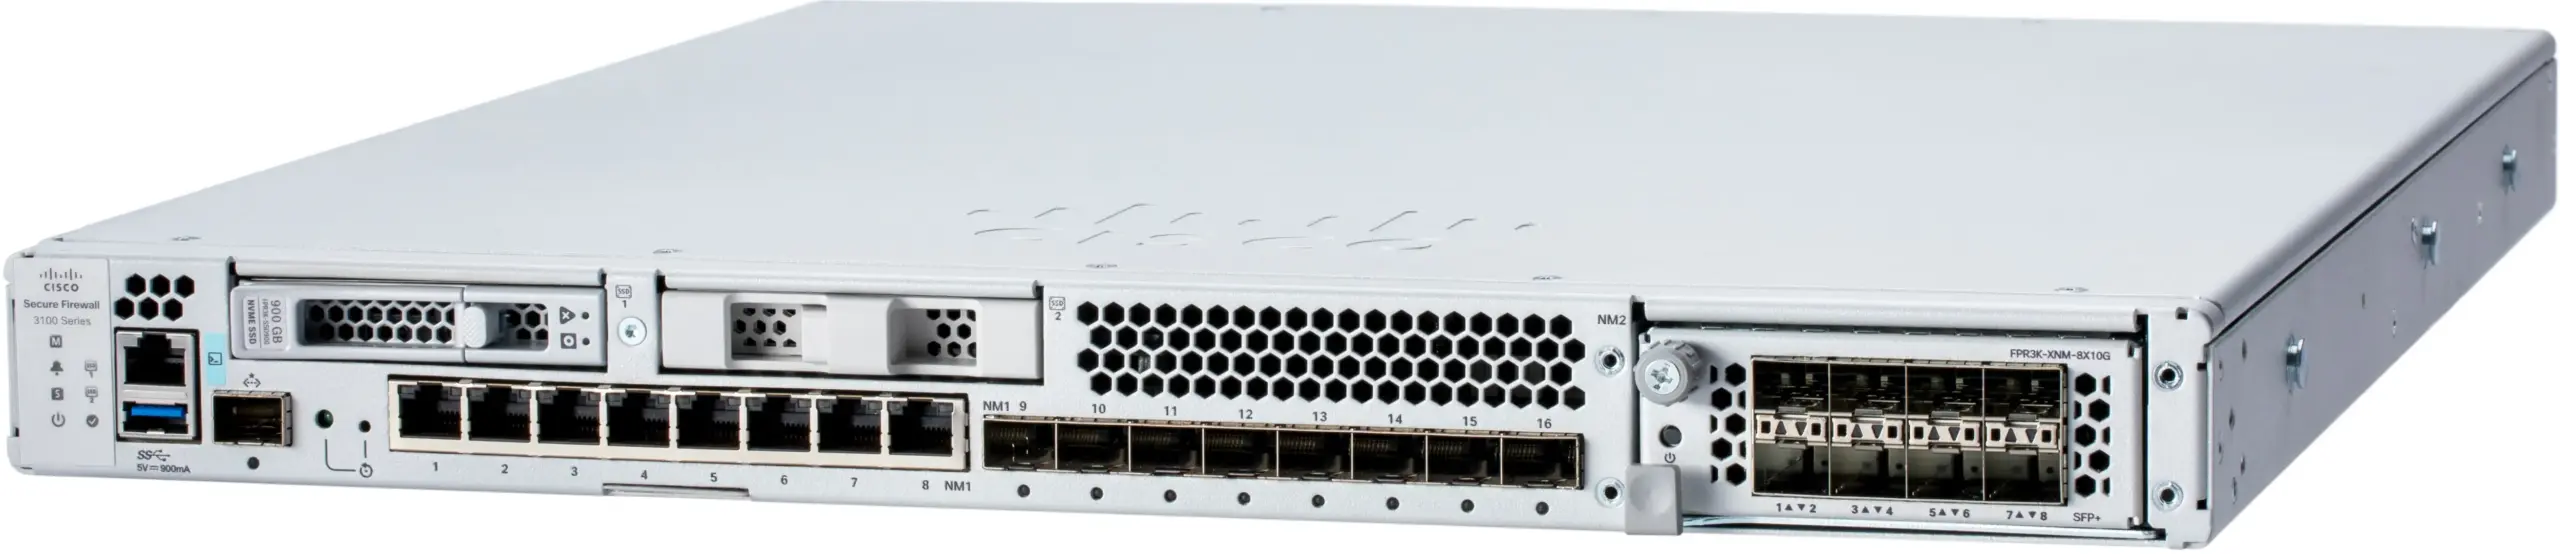 Cisco FPR3130-NGFW-K9 - Hardware Firewall